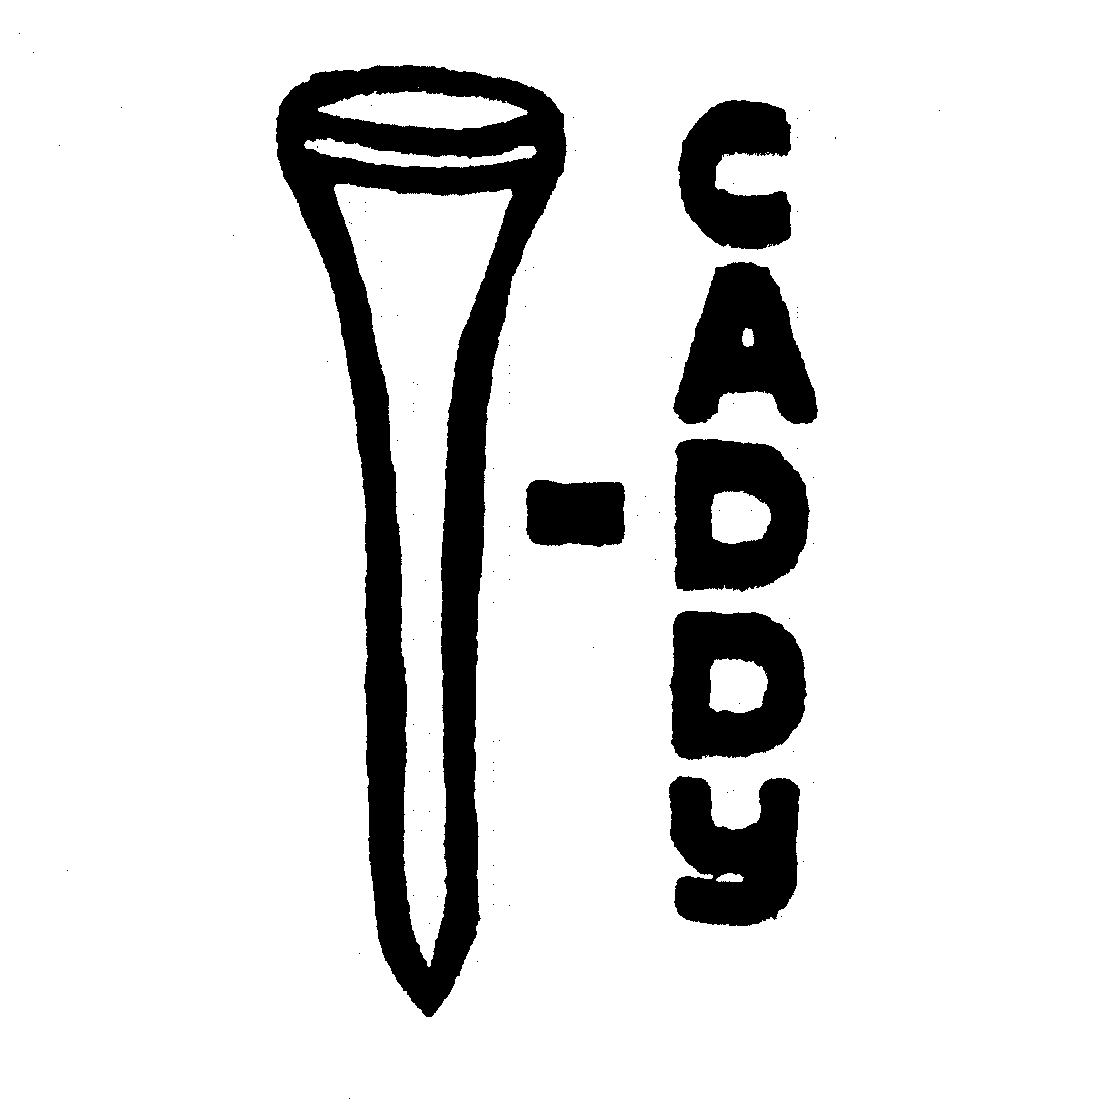 Trademark Logo CADDY